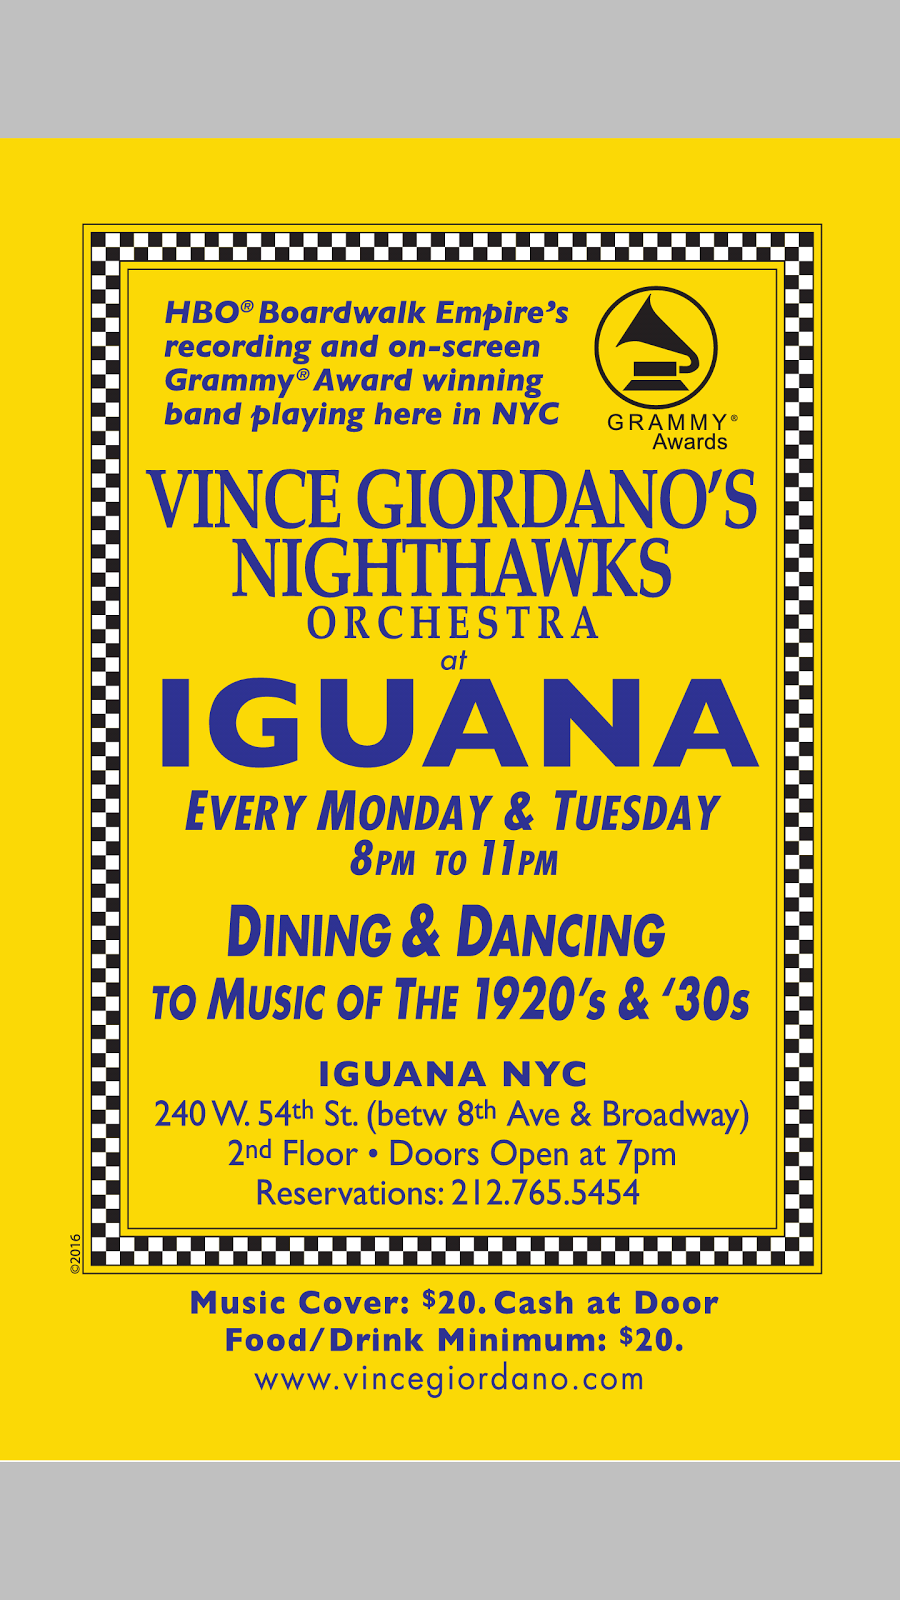 Photo of Iguana New York in New York City, New York, United States - 6 Picture of Restaurant, Food, Point of interest, Establishment, Bar, Night club